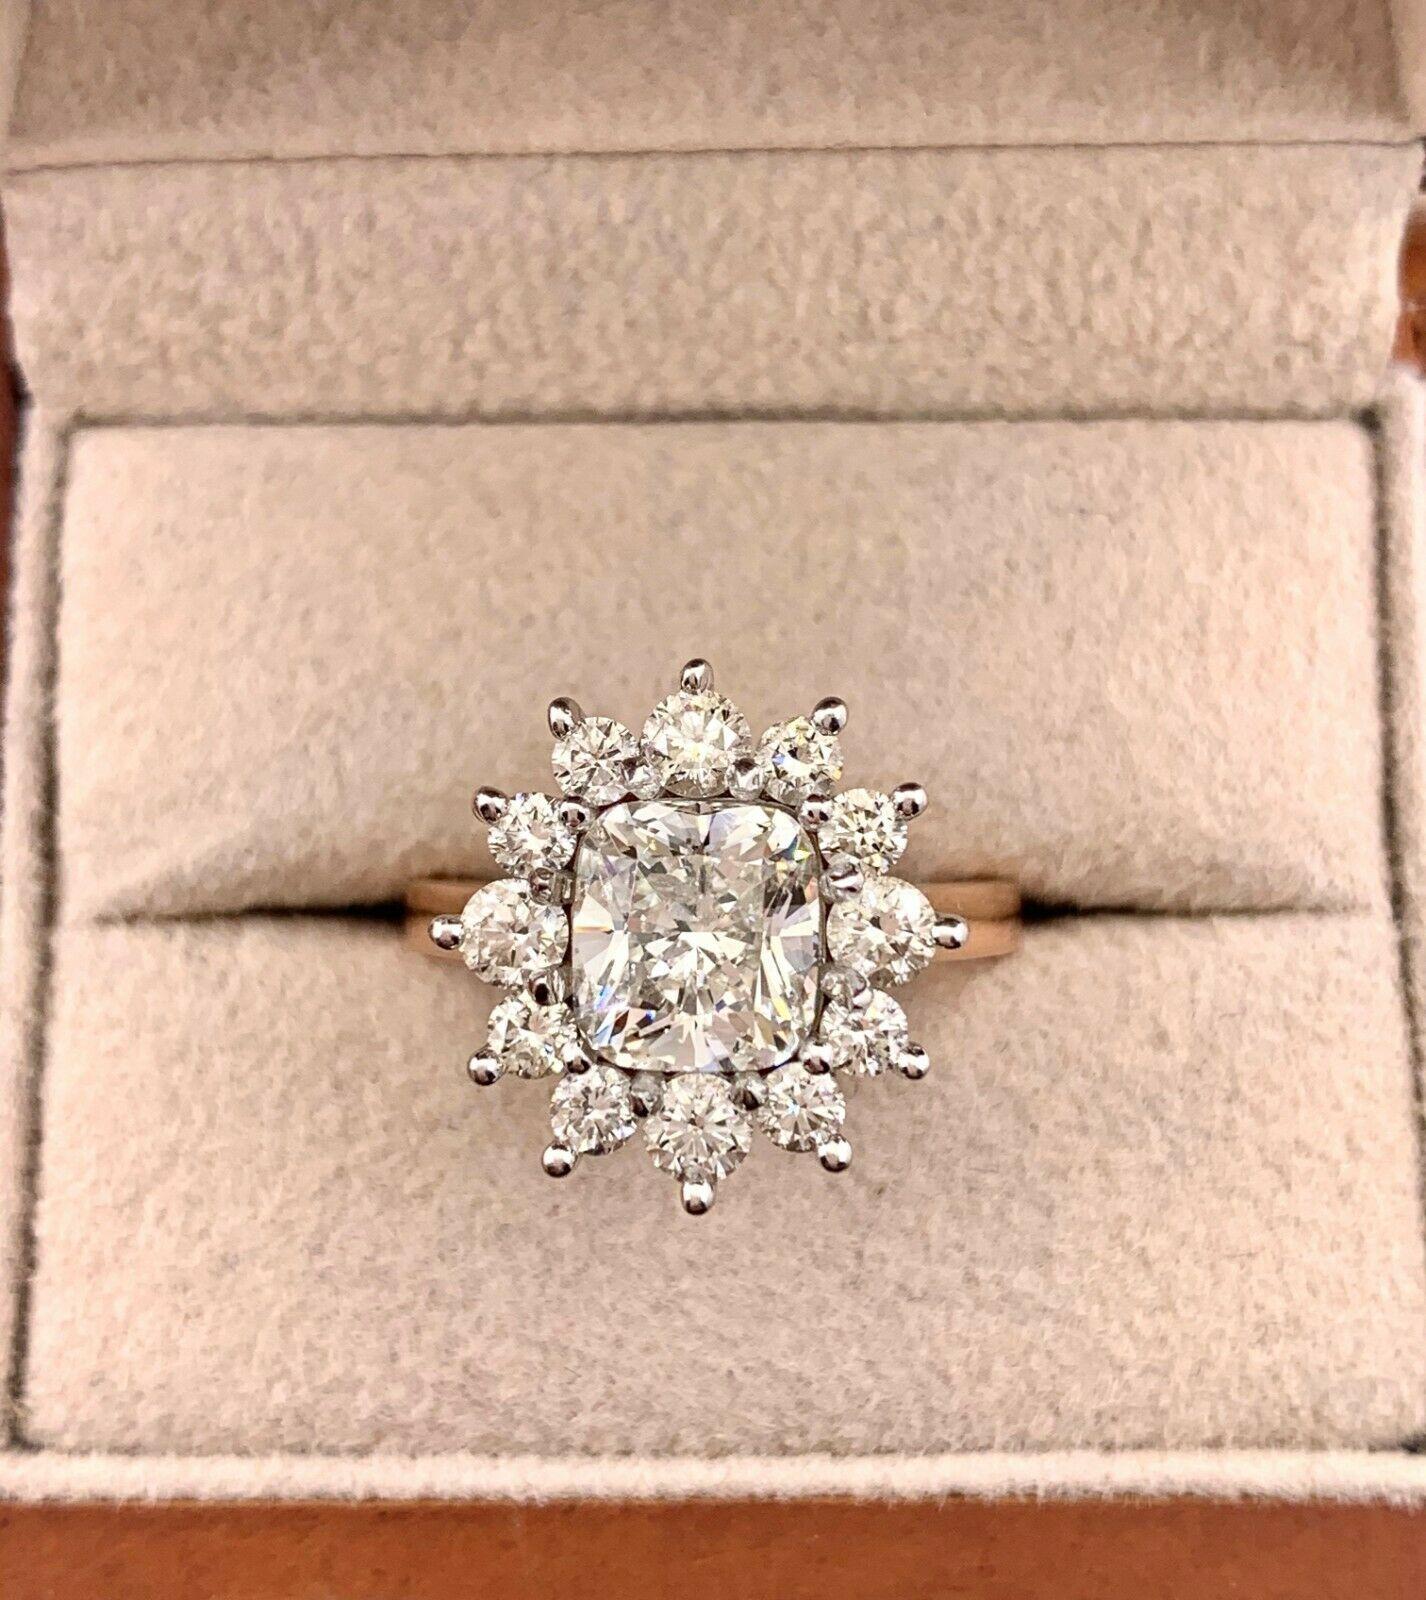 Cushion Cut Diamond Flower Ring
Style:  Custom Halo Diamond Engagement Ring
Metal: 14K Rose & White Gold
Size / Measurements:  5, sizable
TCW:  2.88 Carats Total
Main Diamond:  2.08 Carat Cushion Brilliant Cut
Color & Clarity:  J Color, SI2